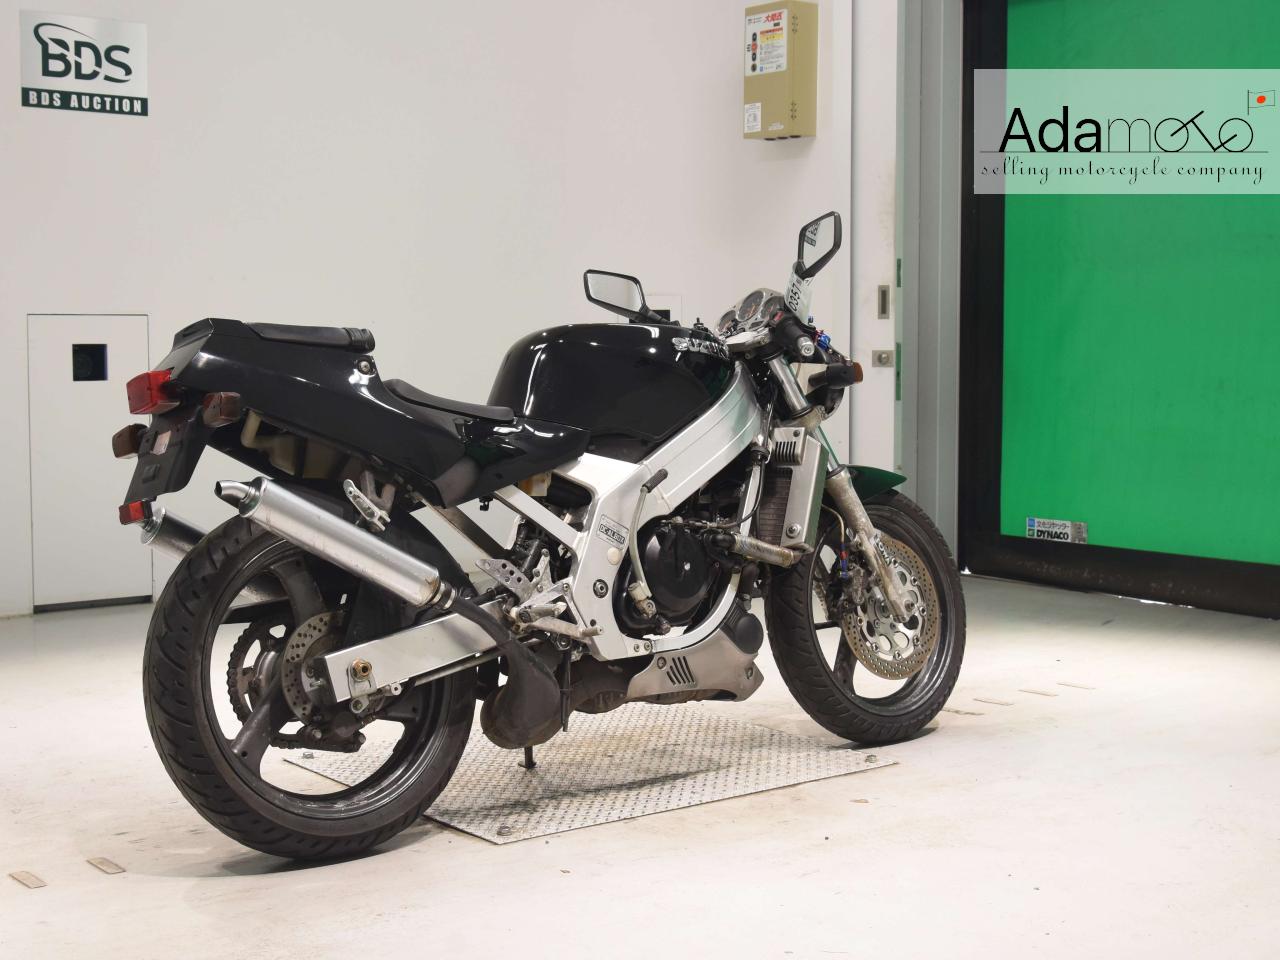 Suzuki WOLF250 - Adamoto - Motorcycles from Japan